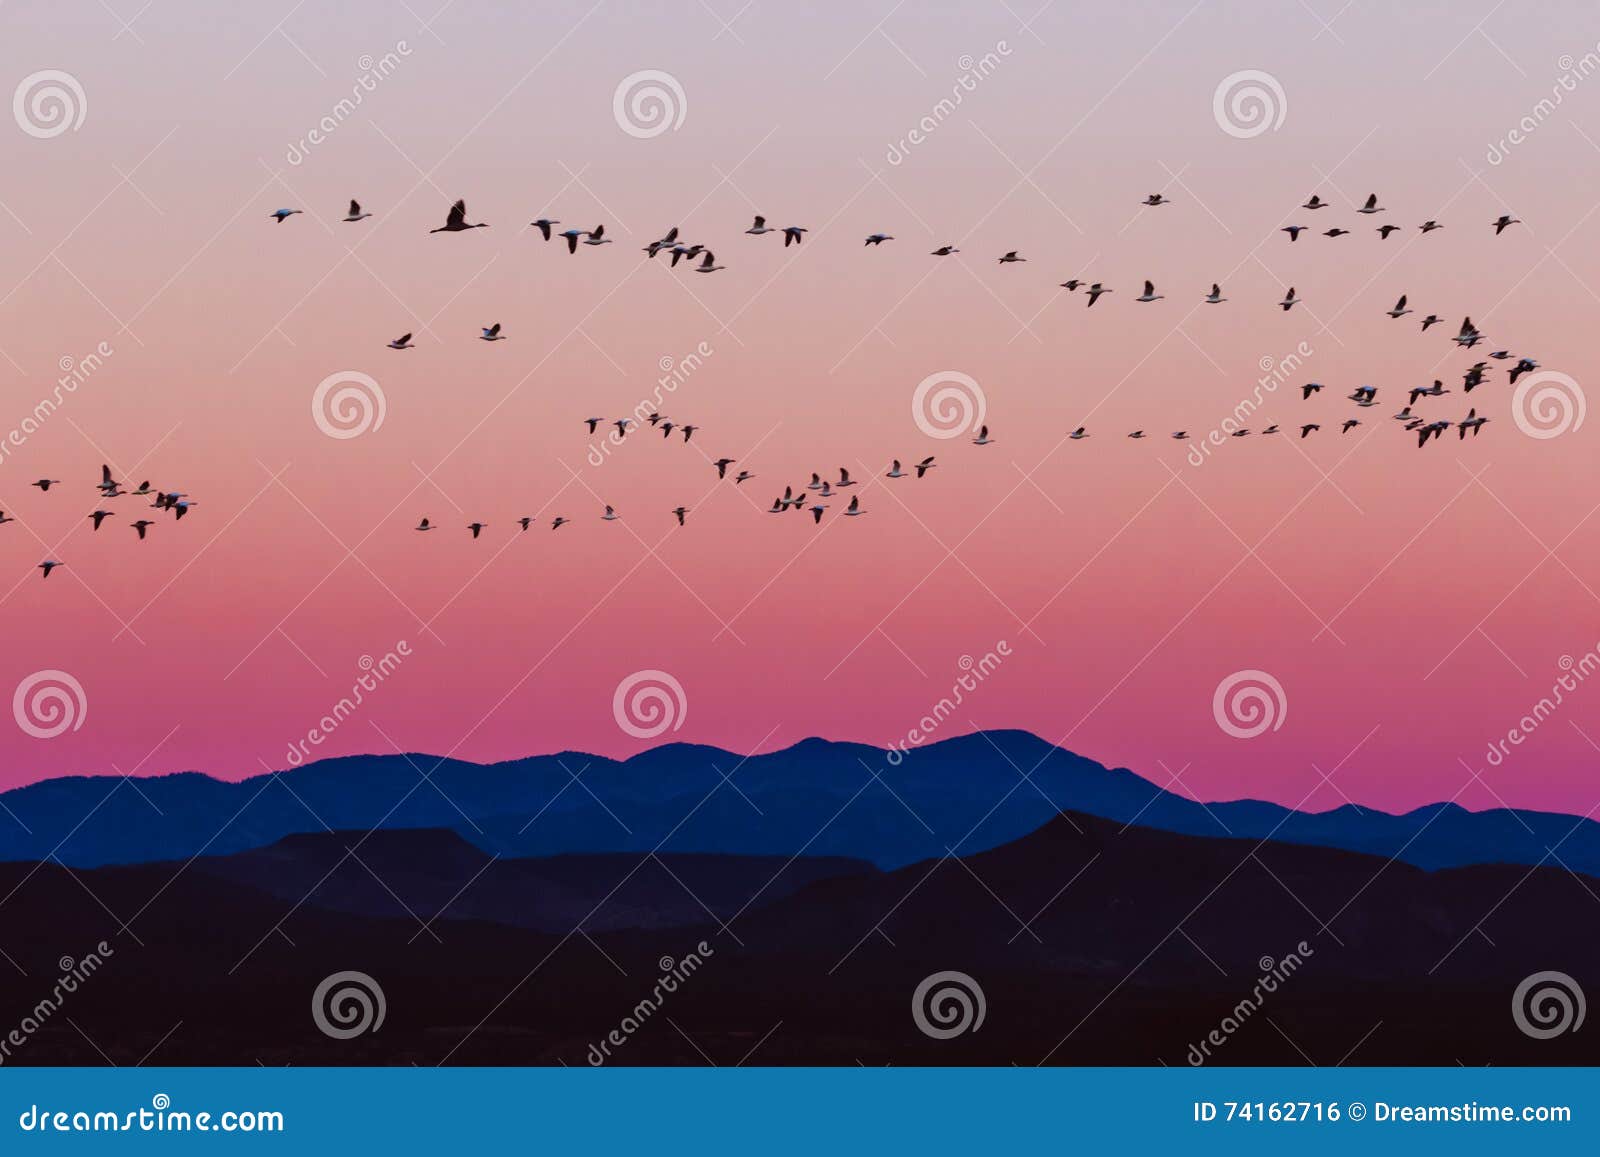 bosque del apache snow geese sunrise